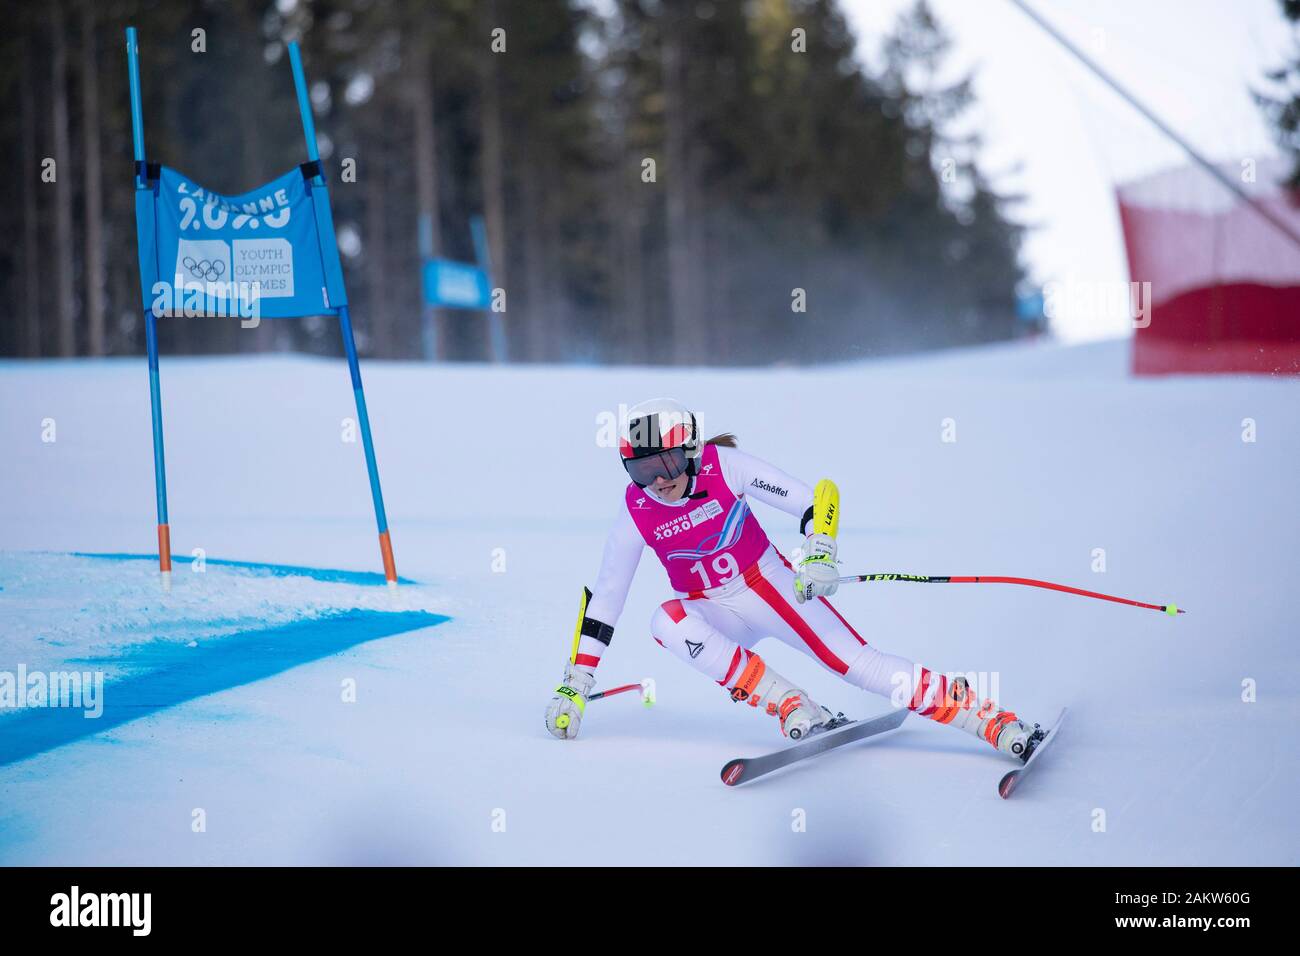 Alpine skier, Teresa Fritzenwallner, AUT, competes in the Lausanne 2020 Women's Super G Downhill Skiing At Les Diablerets Alpine Centre In Switzerland Stock Photo